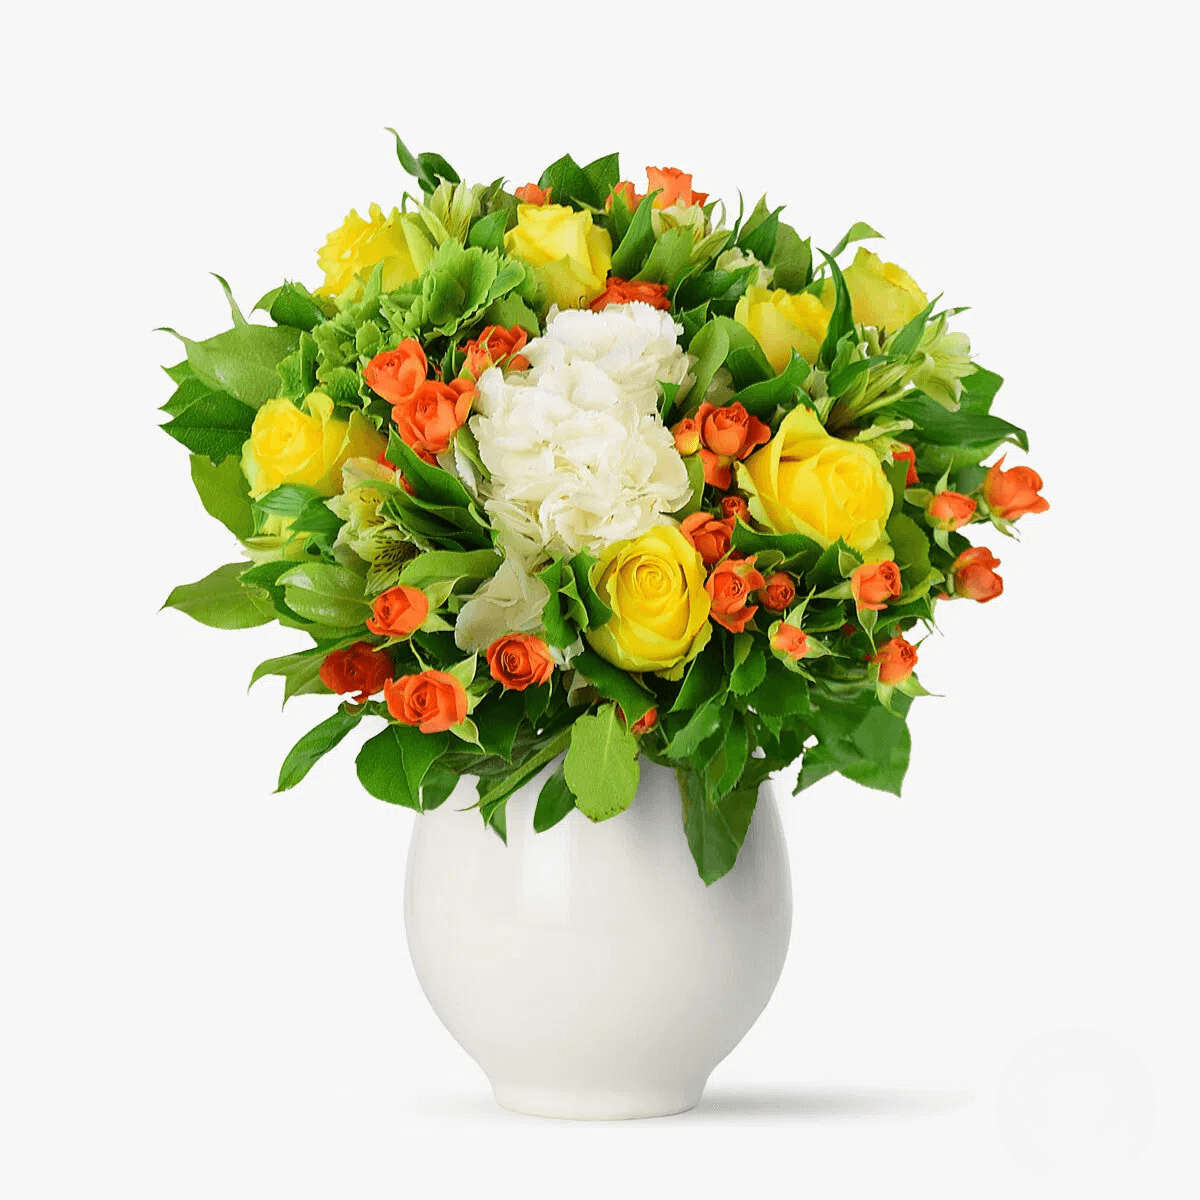 Buchet pentru Alexandra cu hortensia alba si verde, trandafiri galbeni pentru ocazii unice